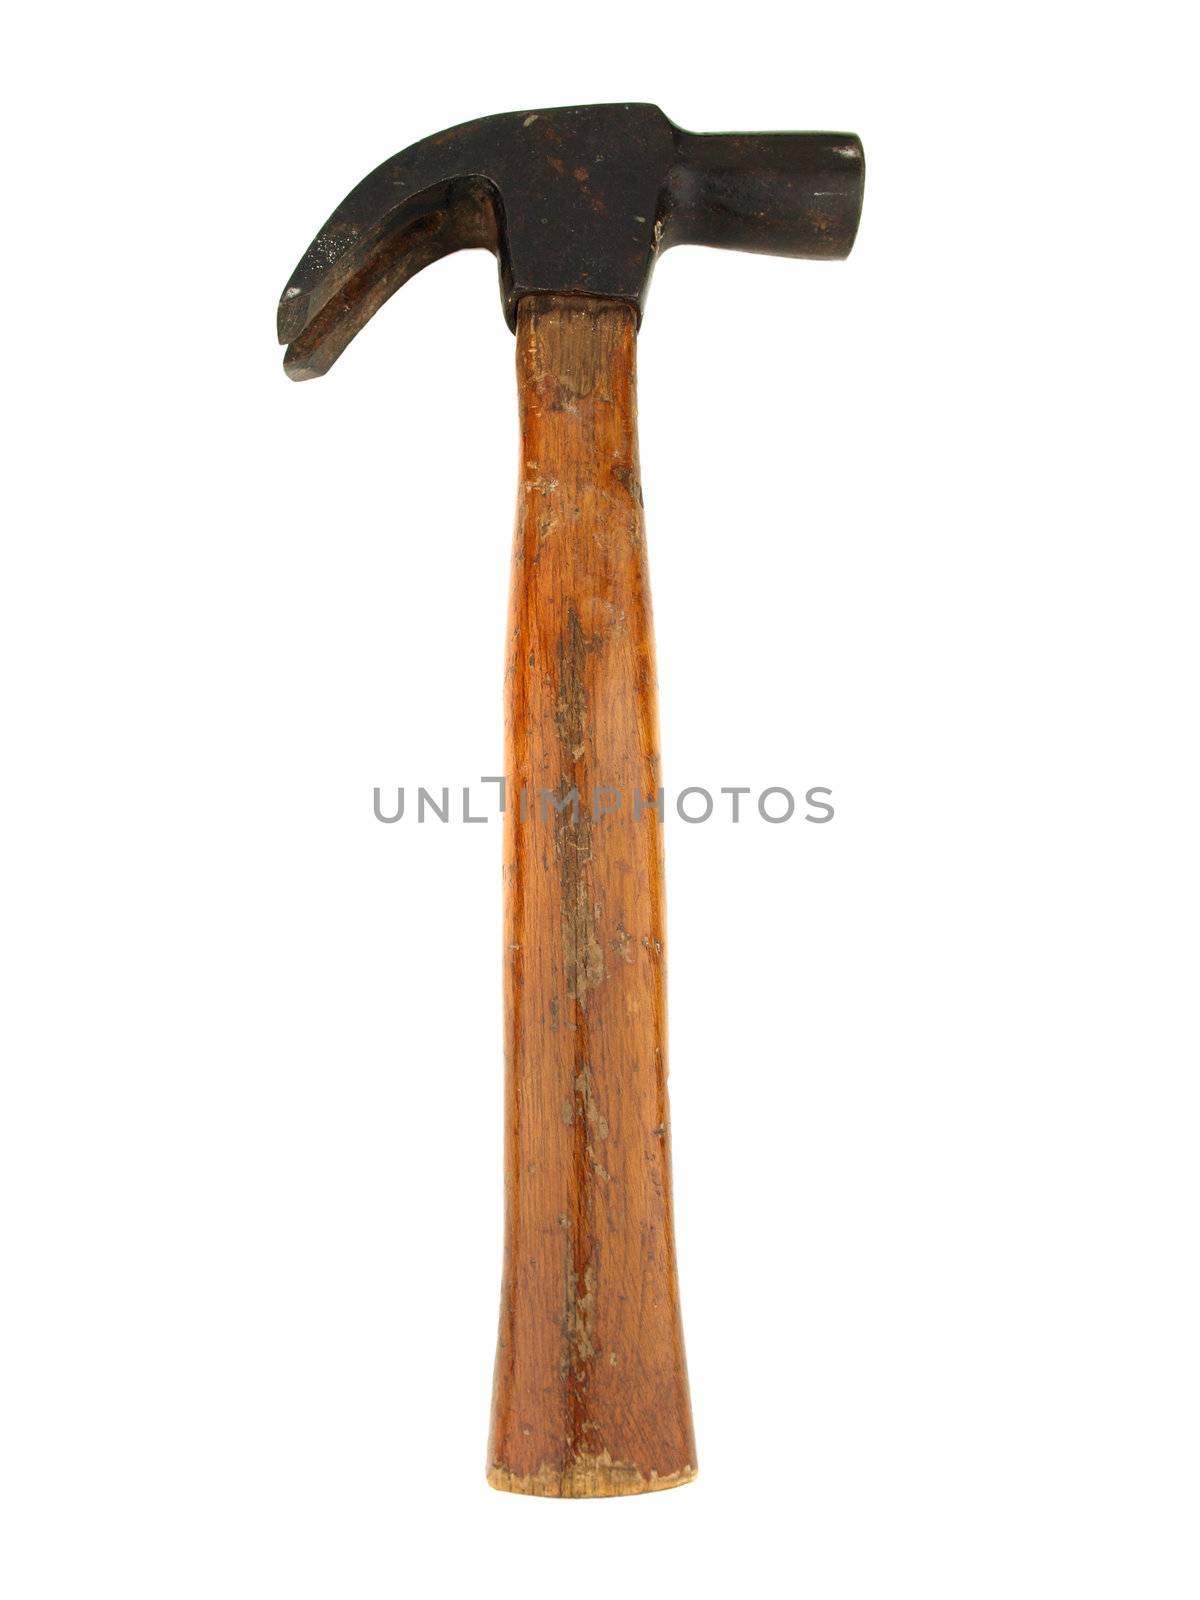 Hammer by jakgree